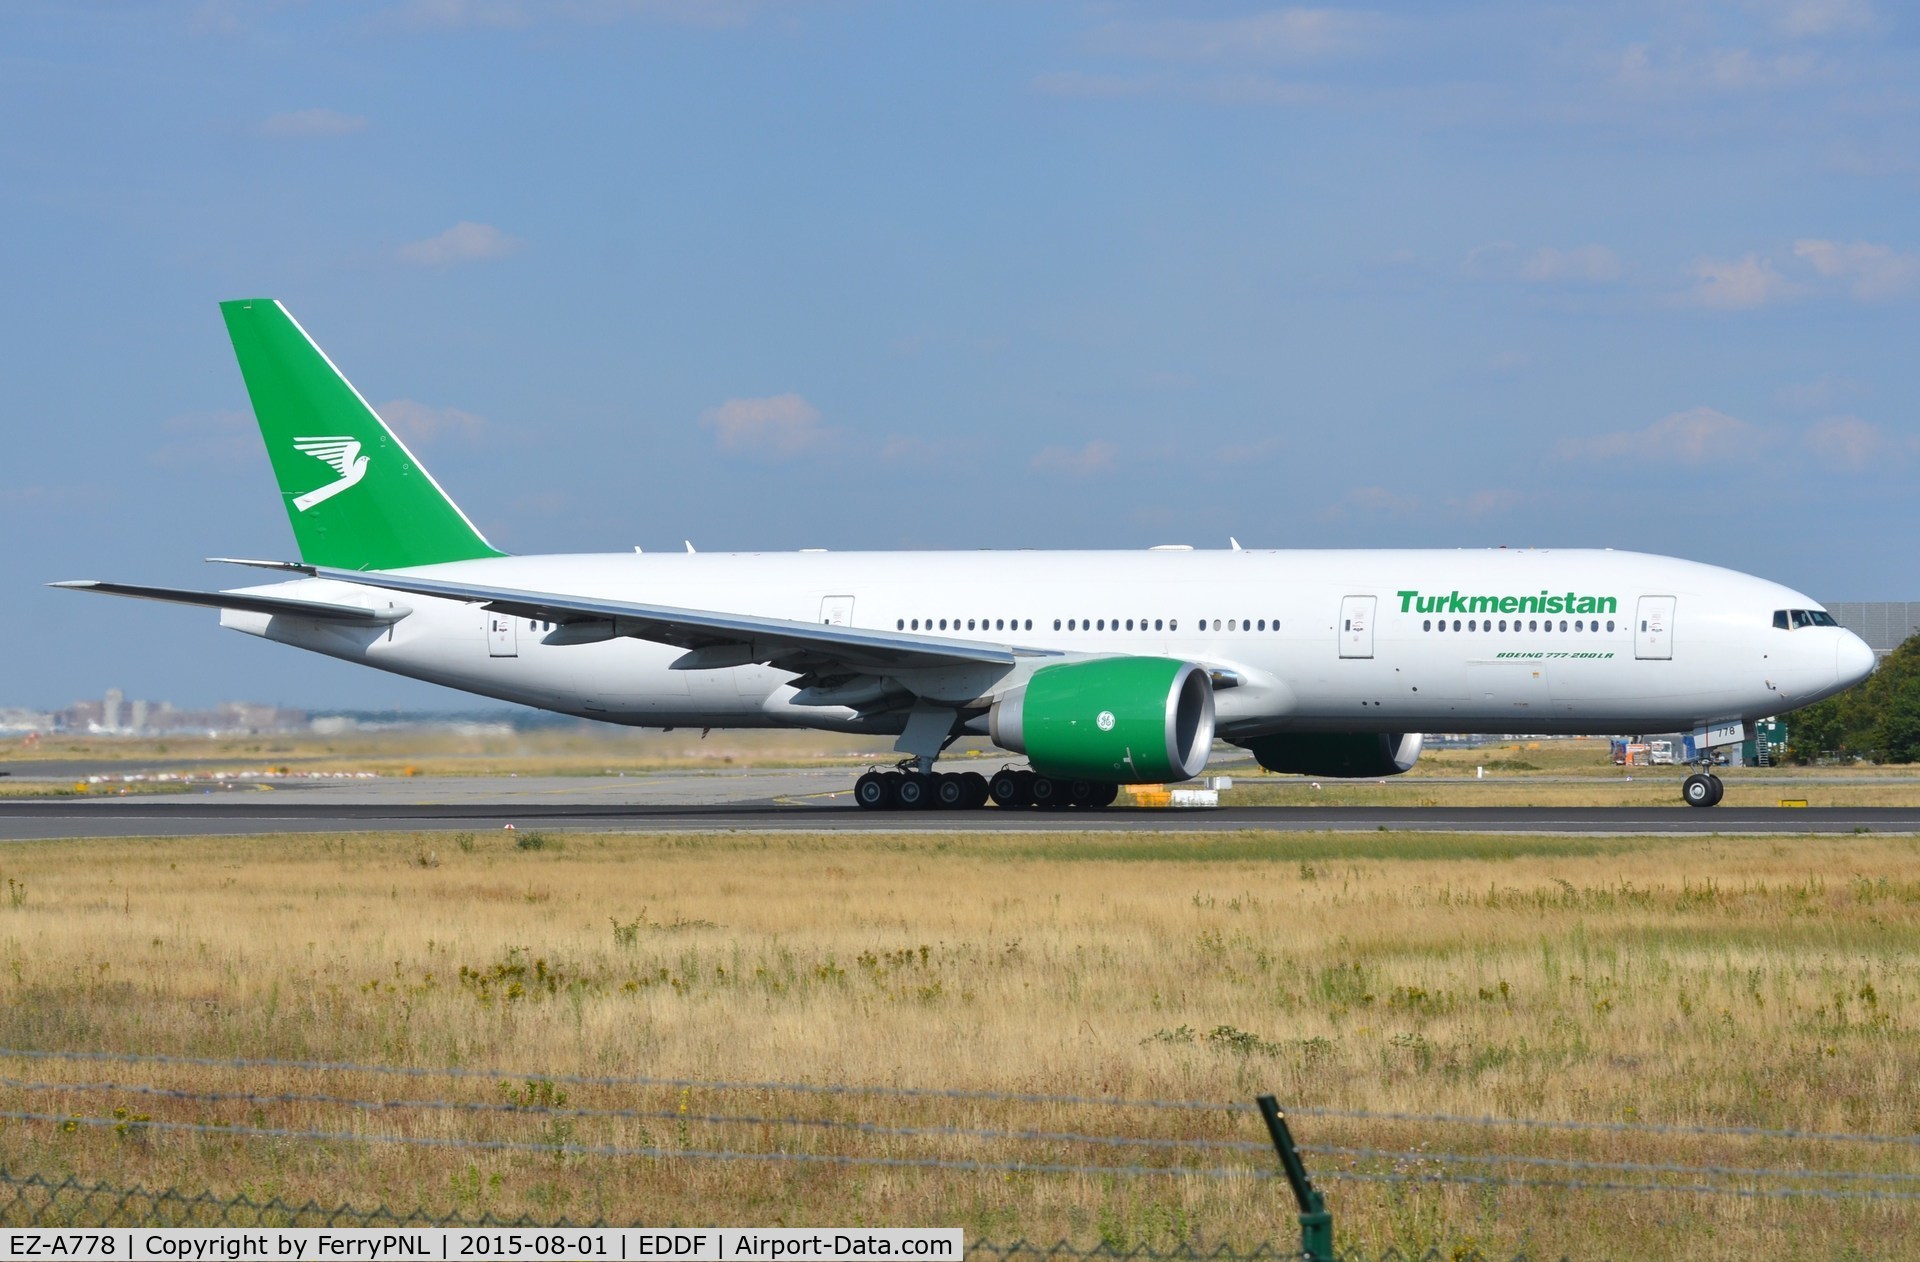 EZ-A778, 2014 Boeing 777-22K/LR C/N 42296, Turkmenistan B772 taking-off from FRA